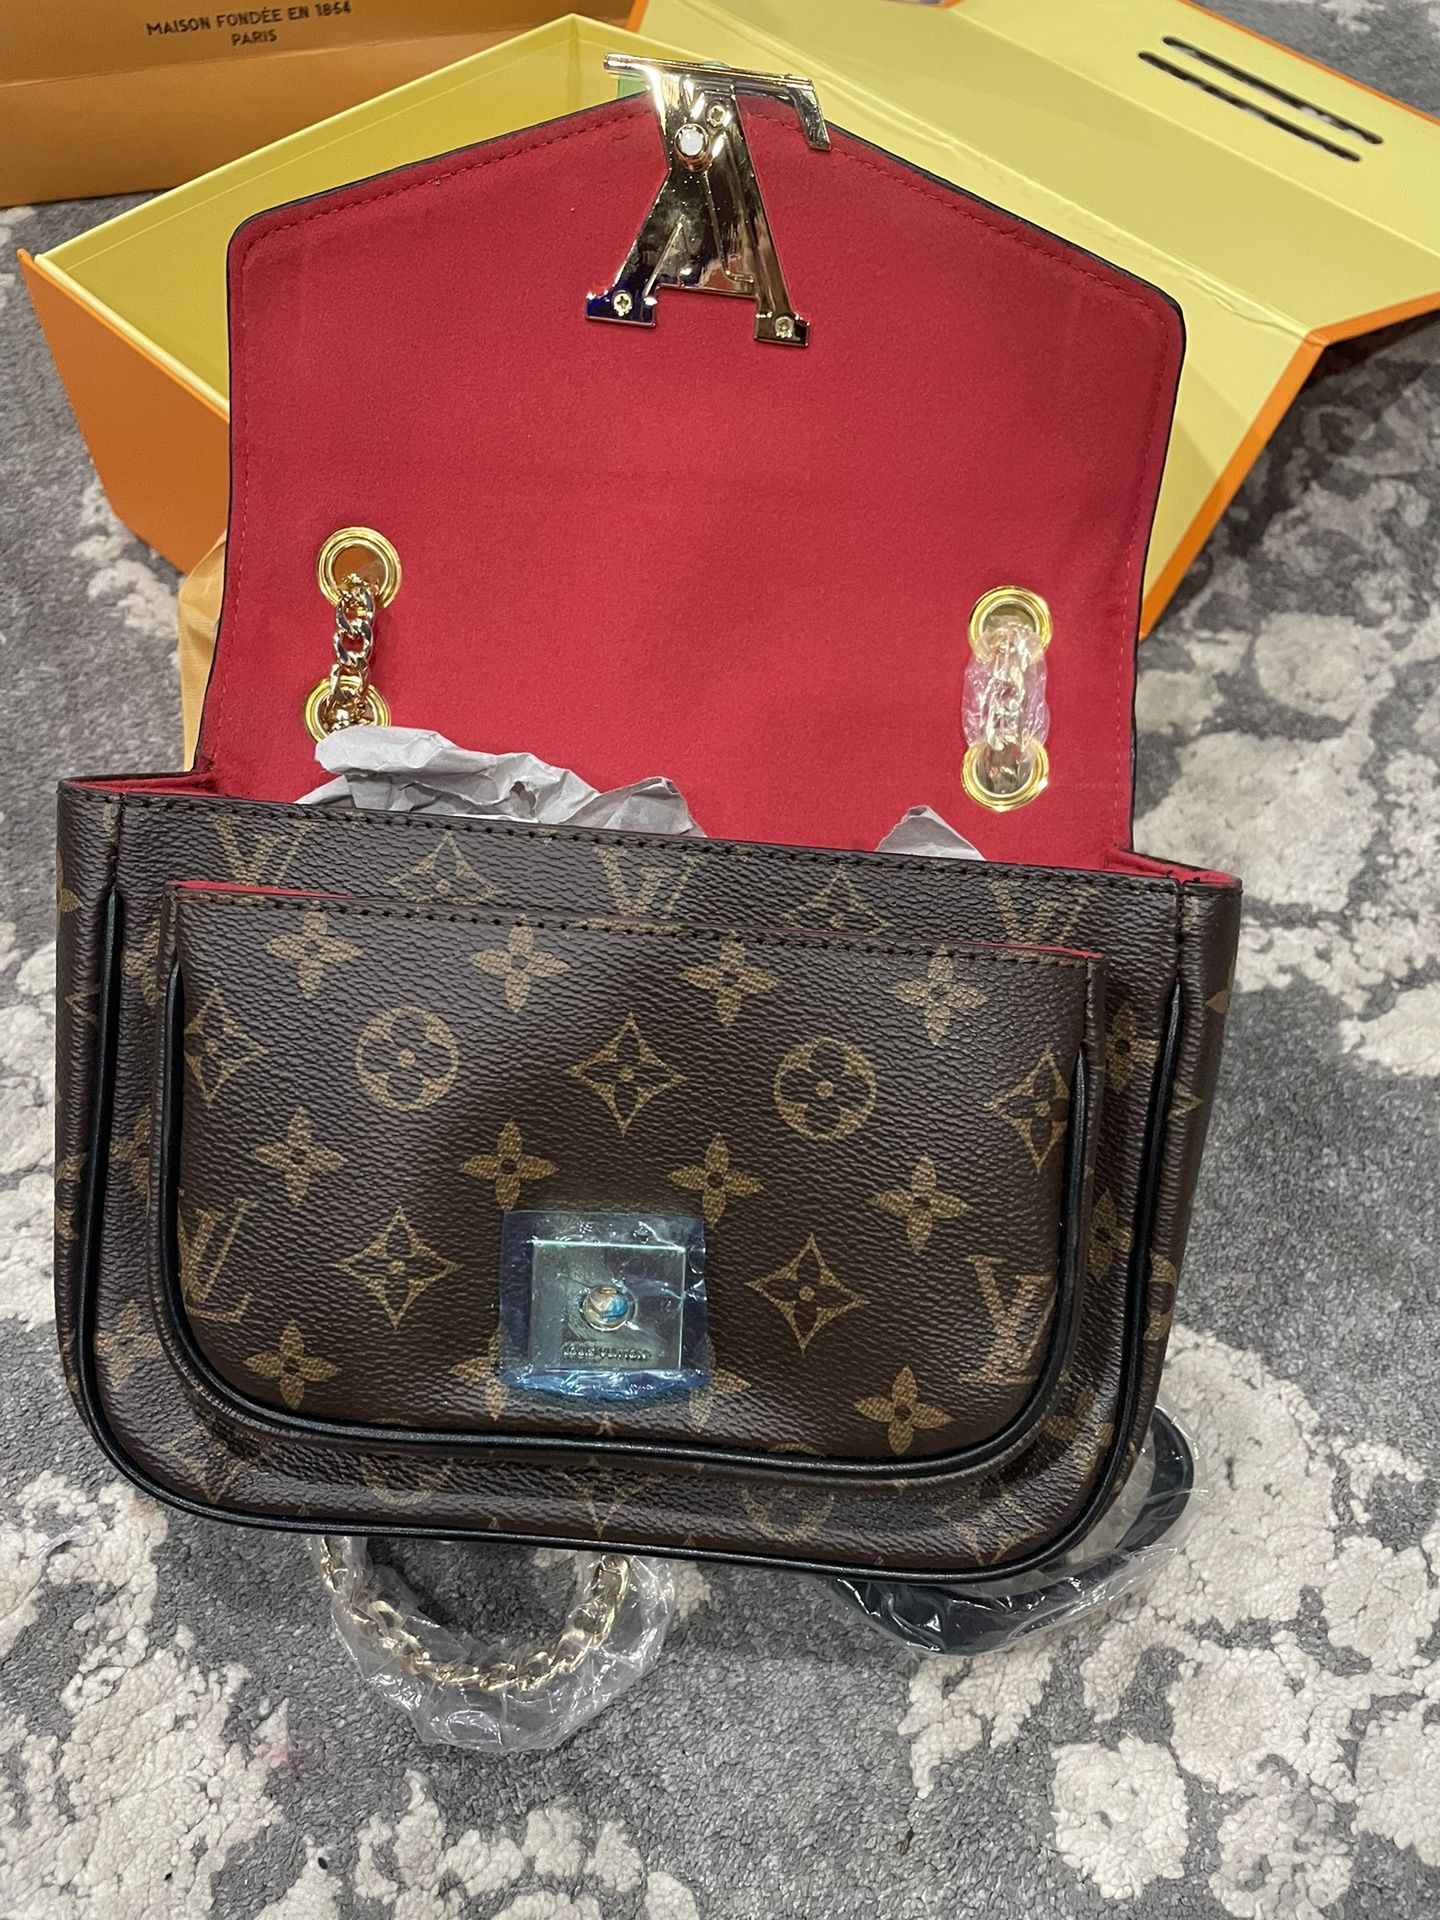 Louis Vuitton Viva Cite Handbag (with Bag & Box) for Sale in Colts Neck, NJ  - OfferUp